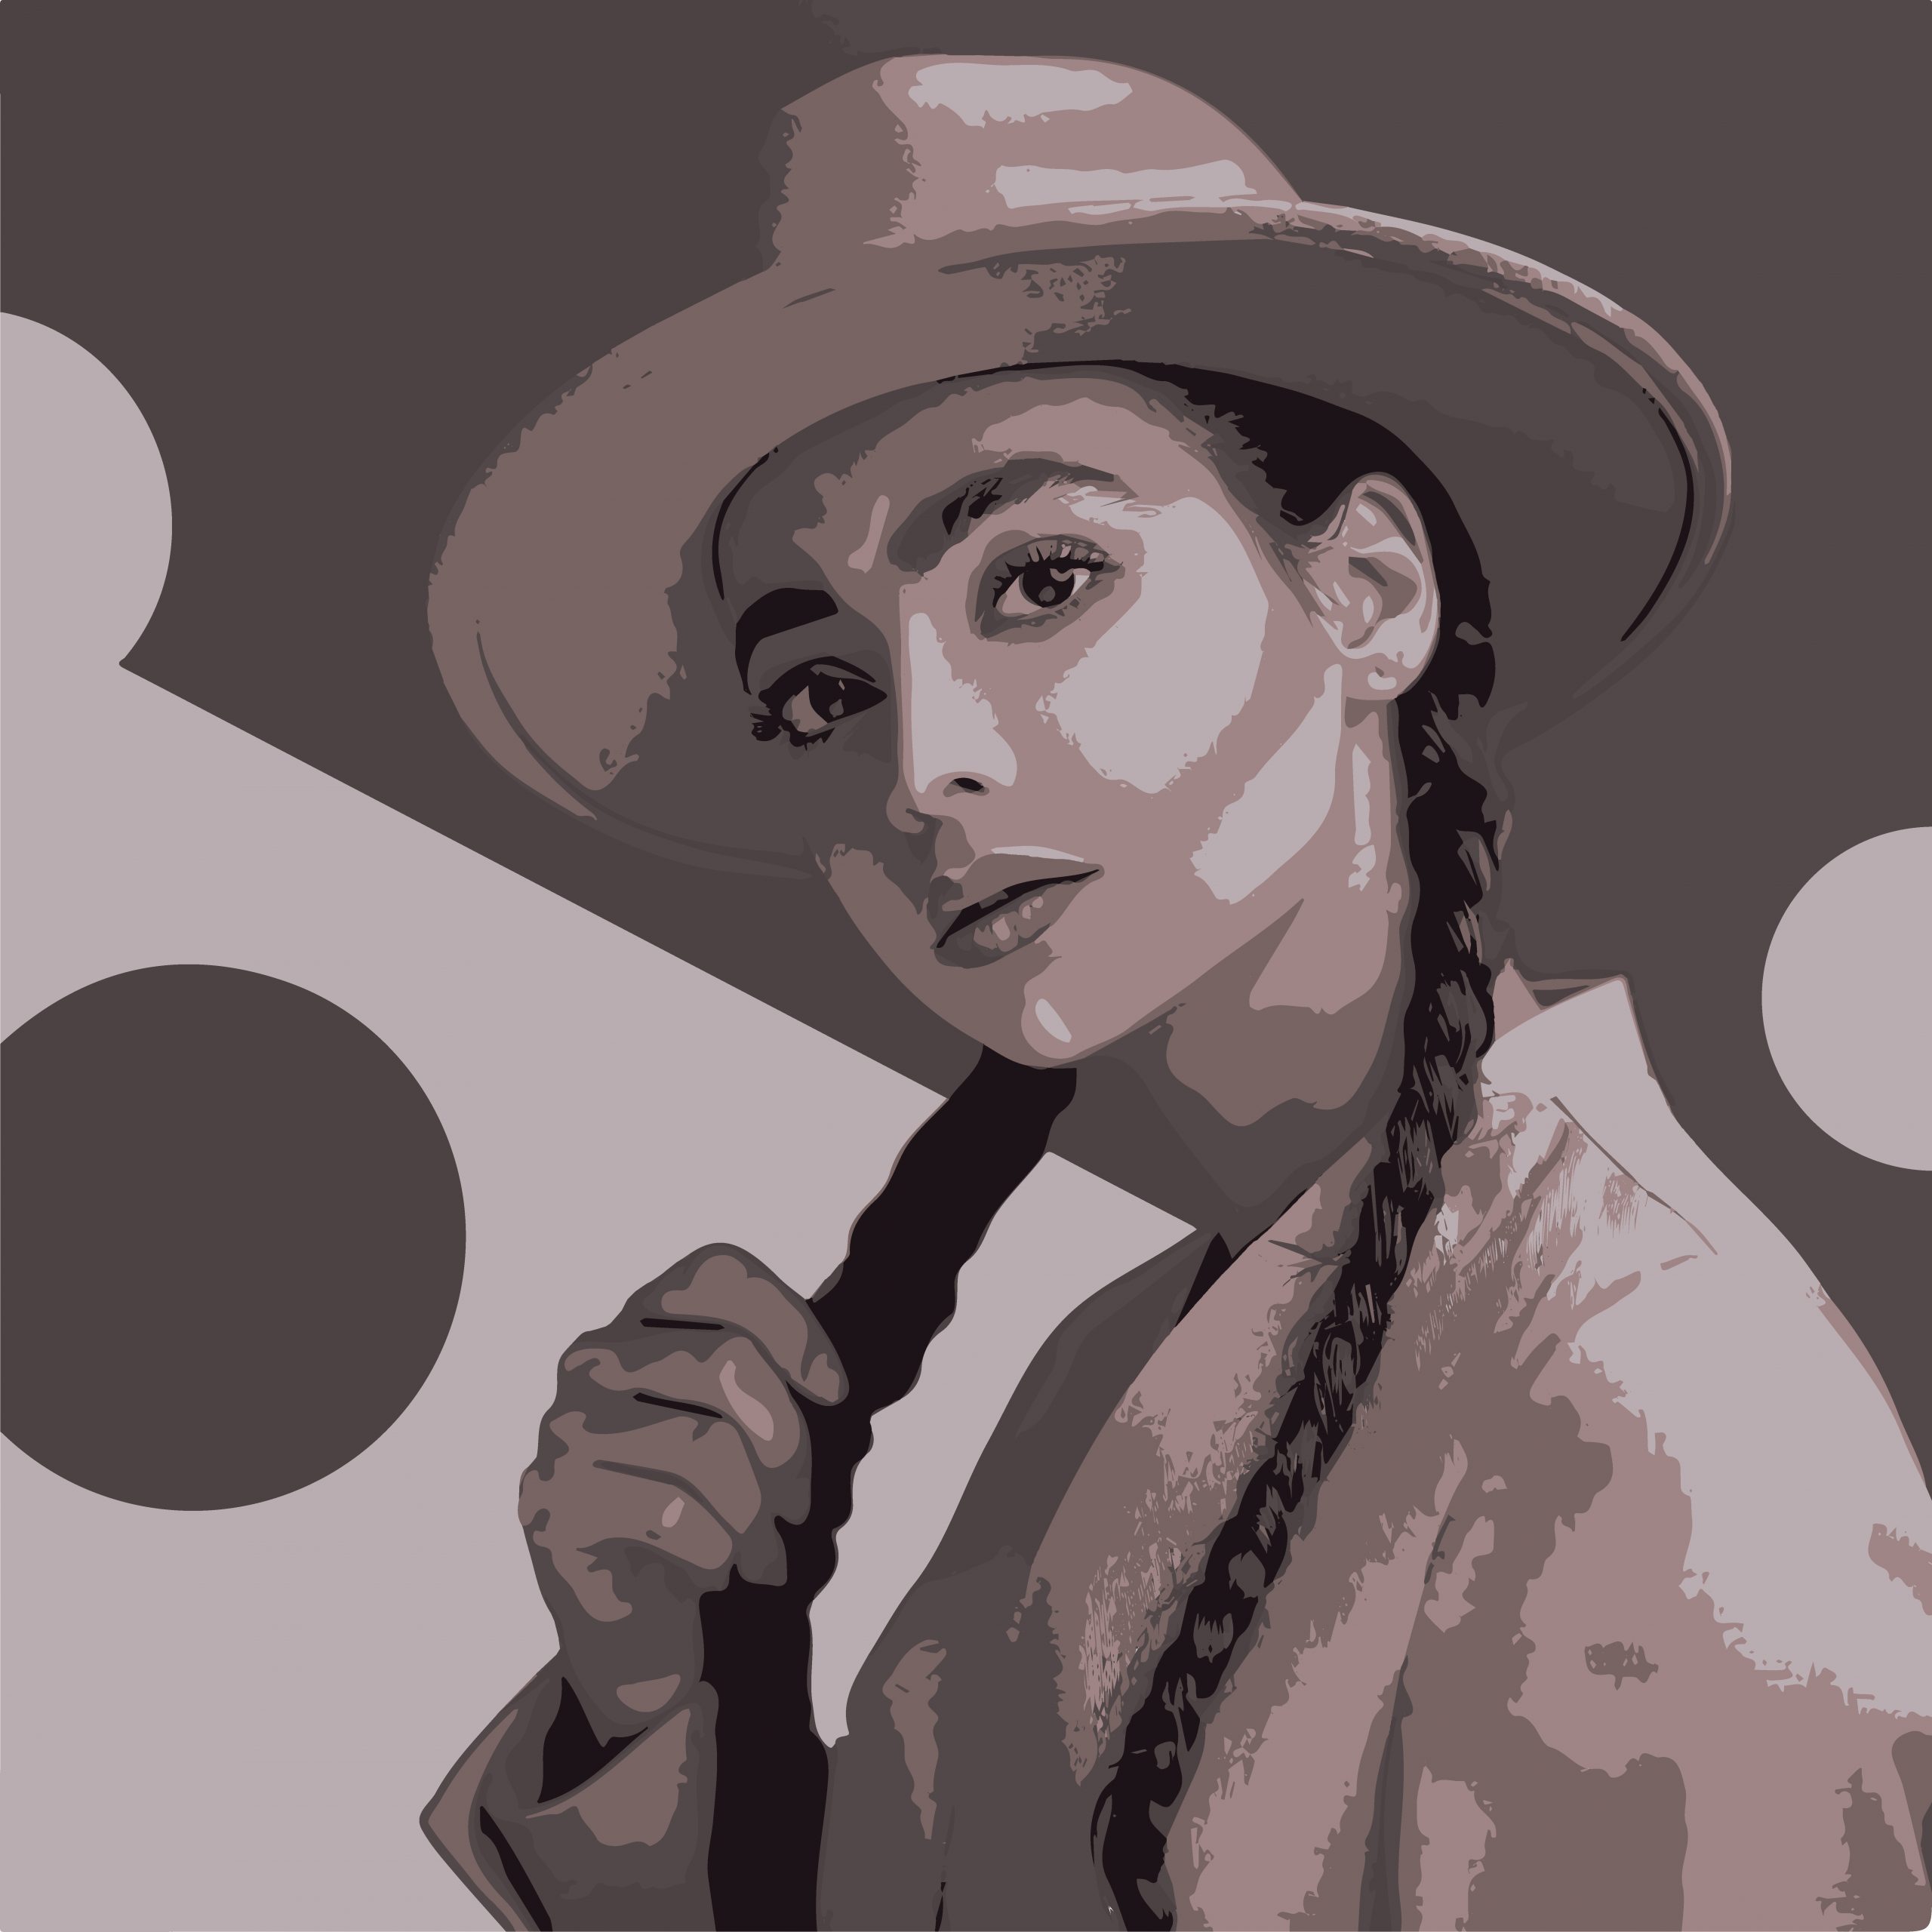 Portrait illustration of a girl